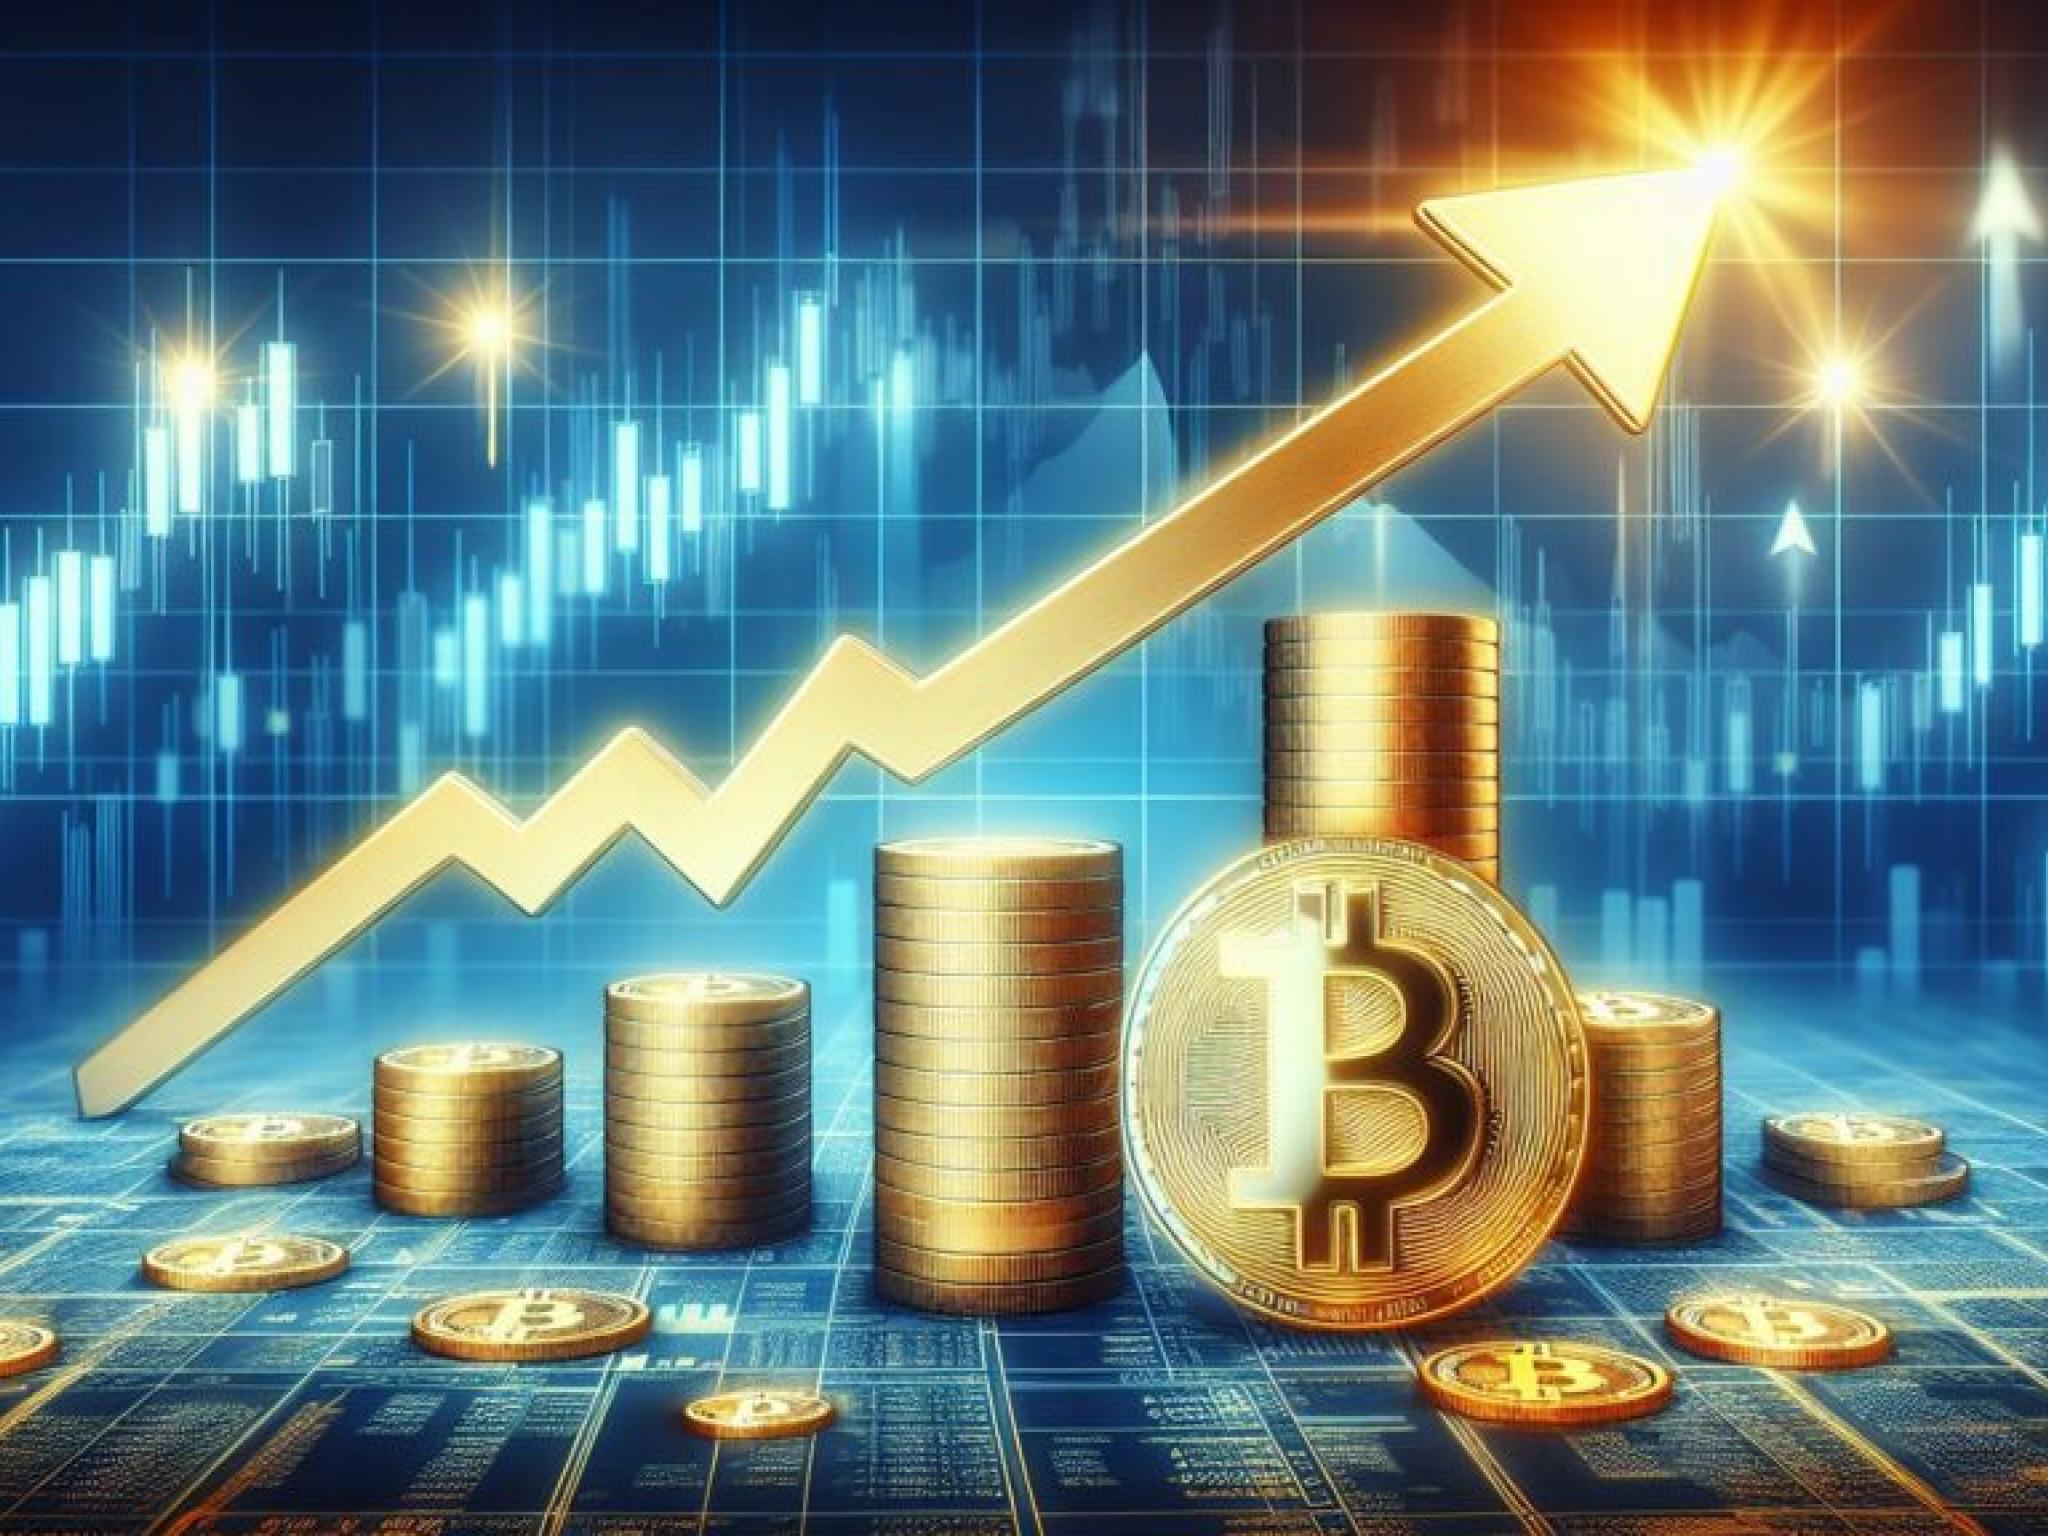  bitcoin-to-surge-over-110k-in-q3-despite-impending-recession-fears-says-economist-henrik-zeberg 